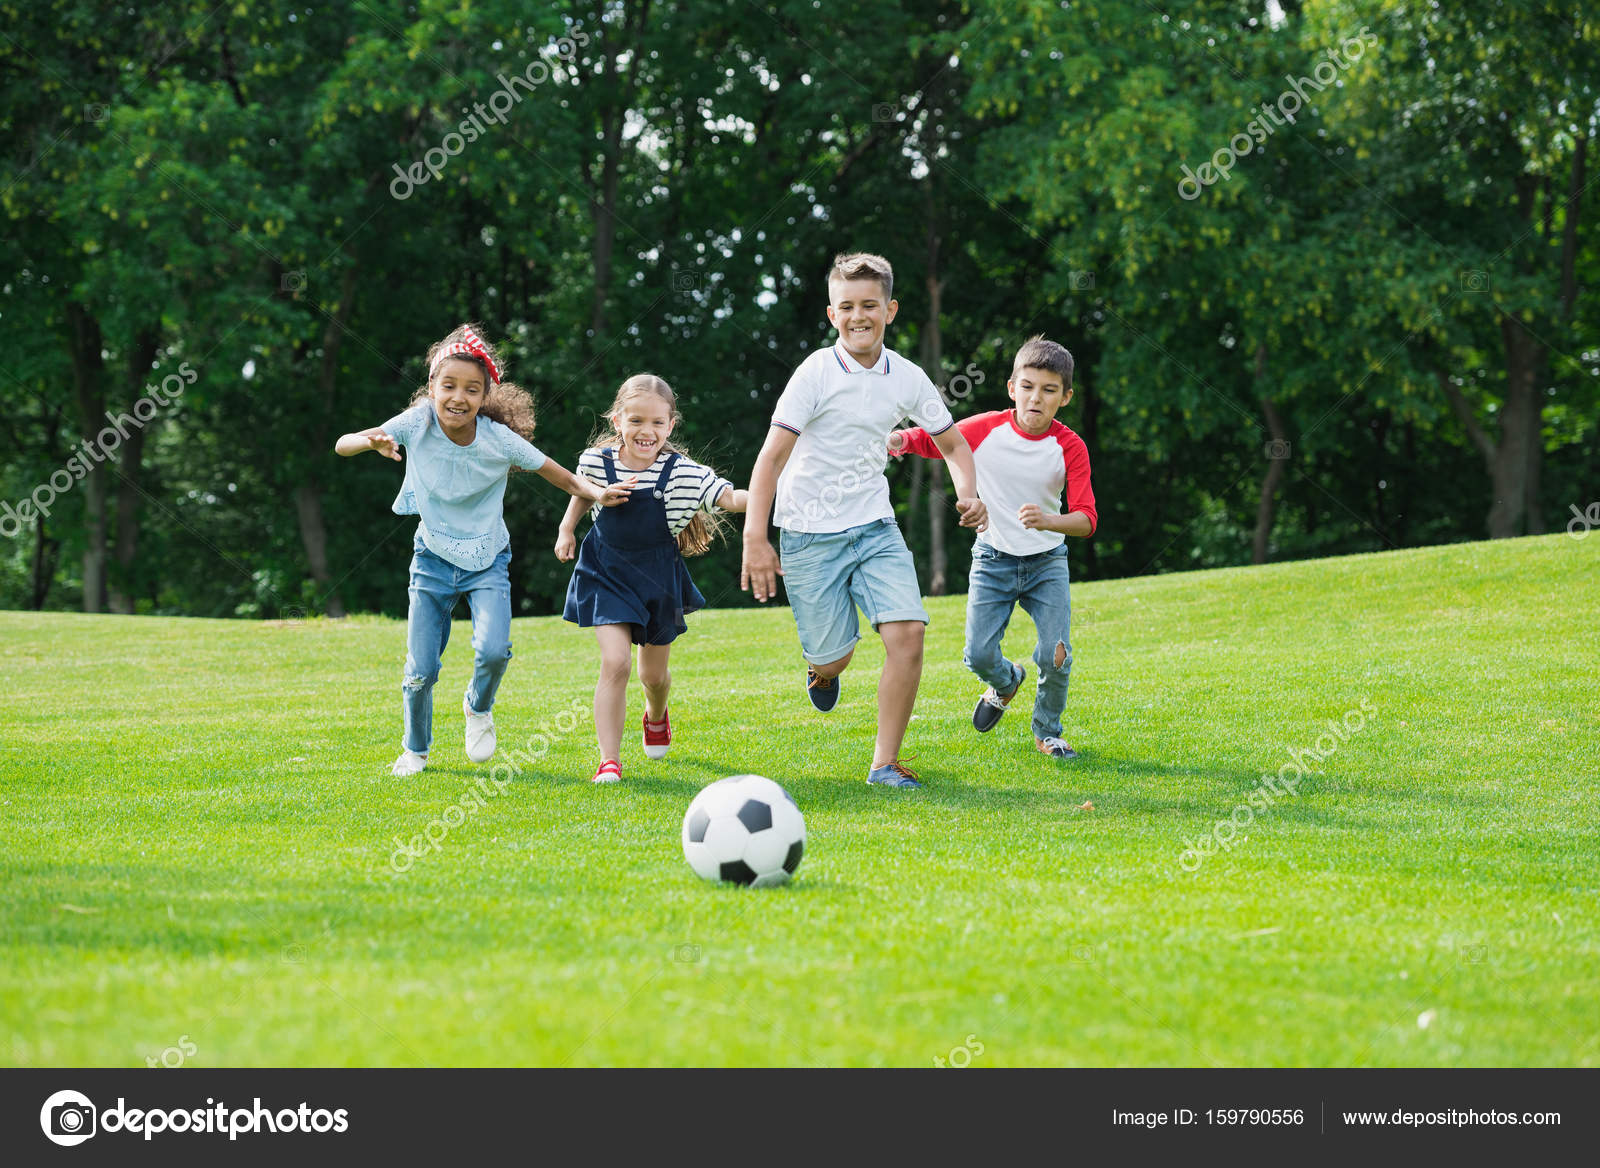 Children playing soccer — Stock Photo © alebloshka #159790556